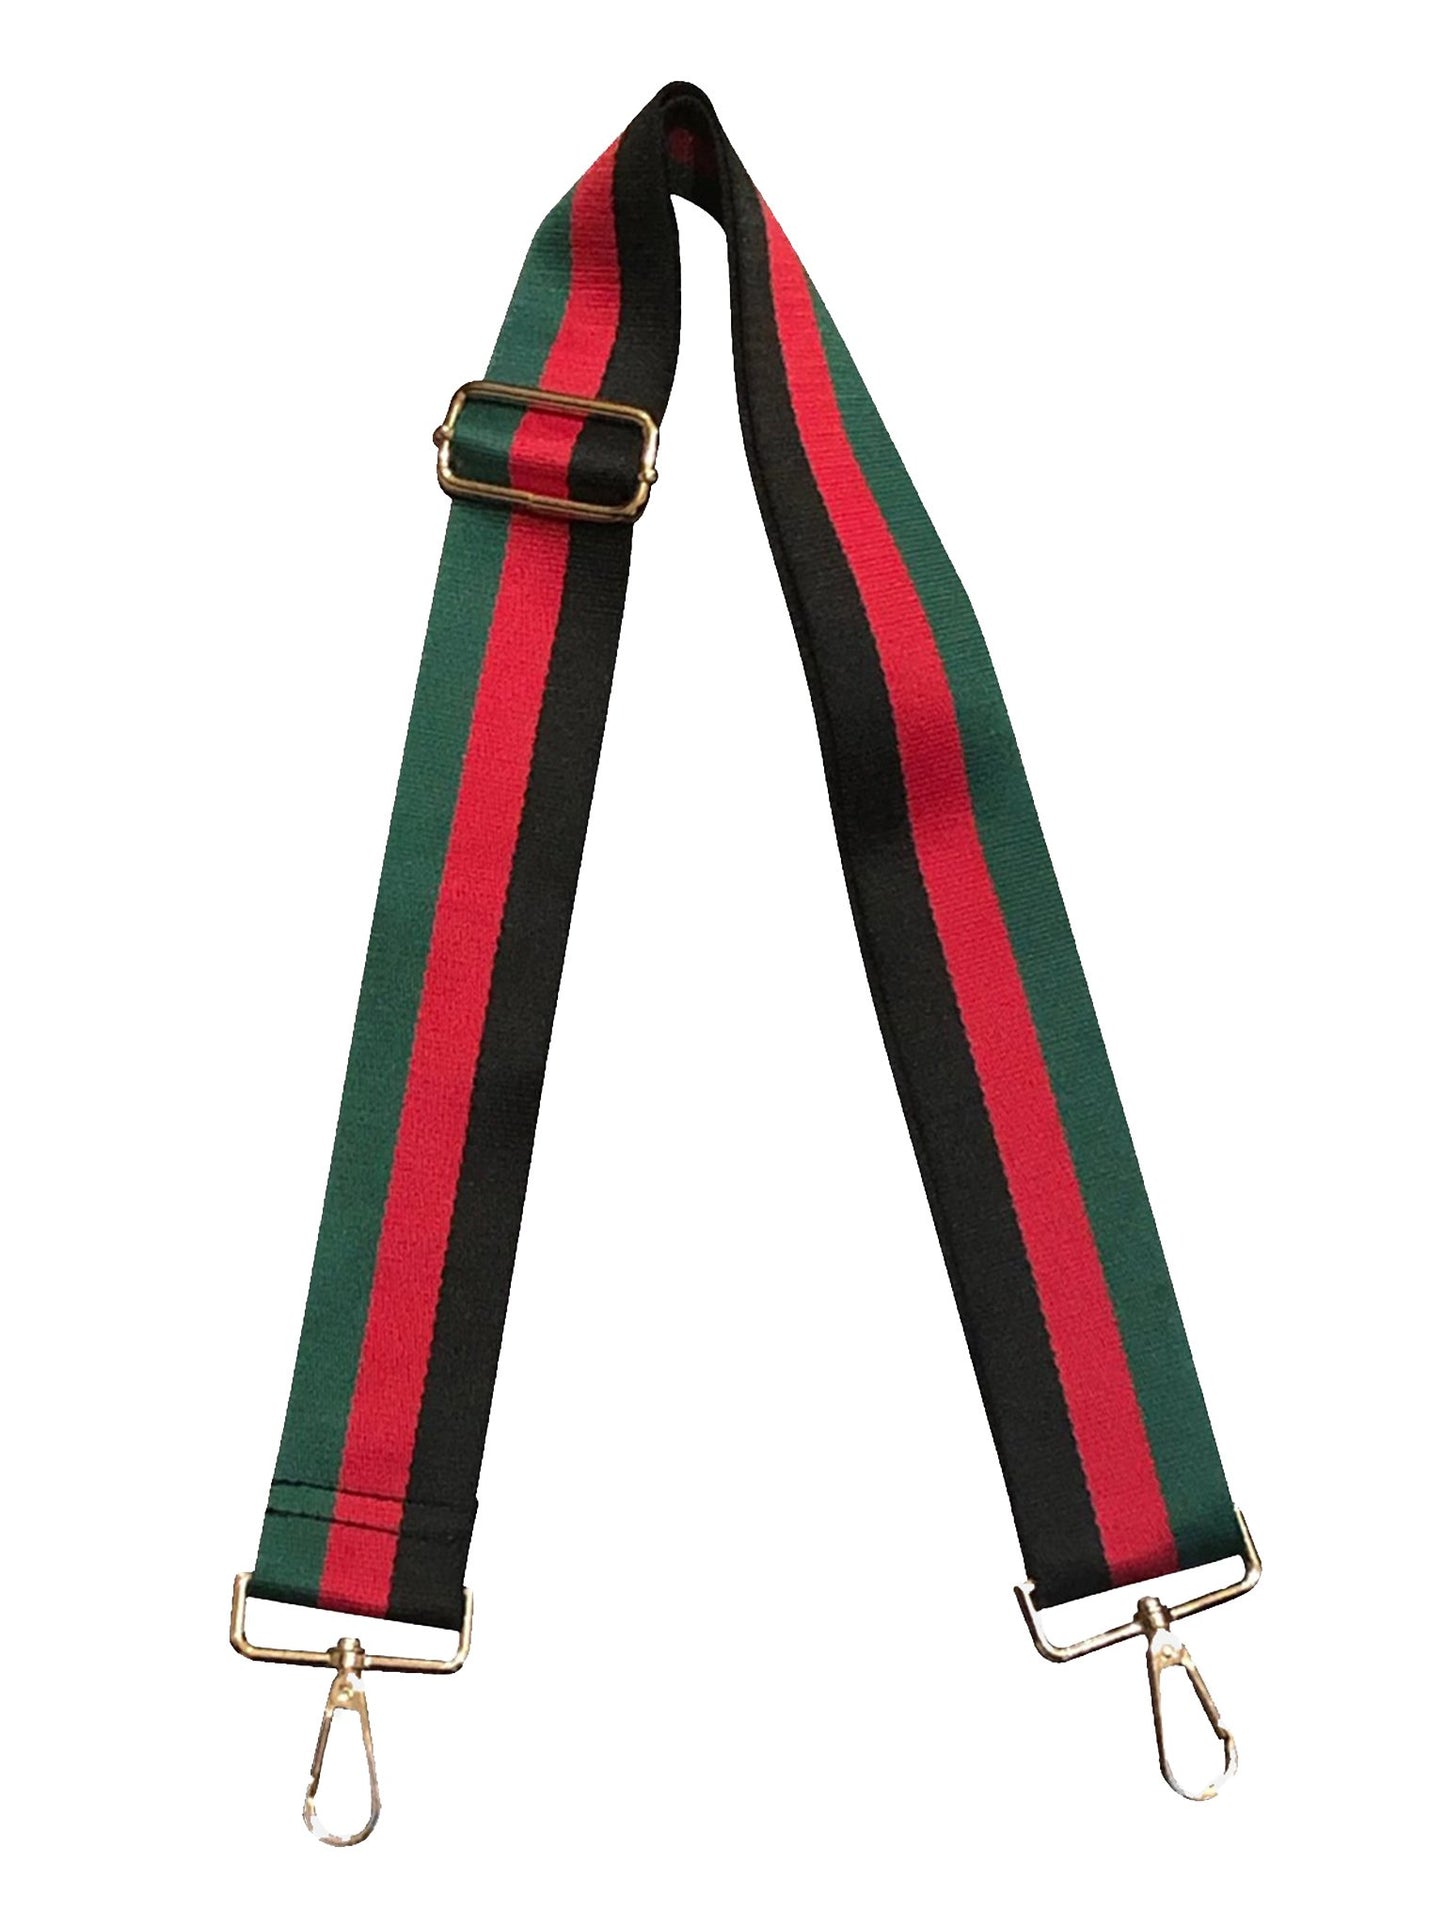 Stripe Adjustable Strap in black/red/green by Ah-Dorned